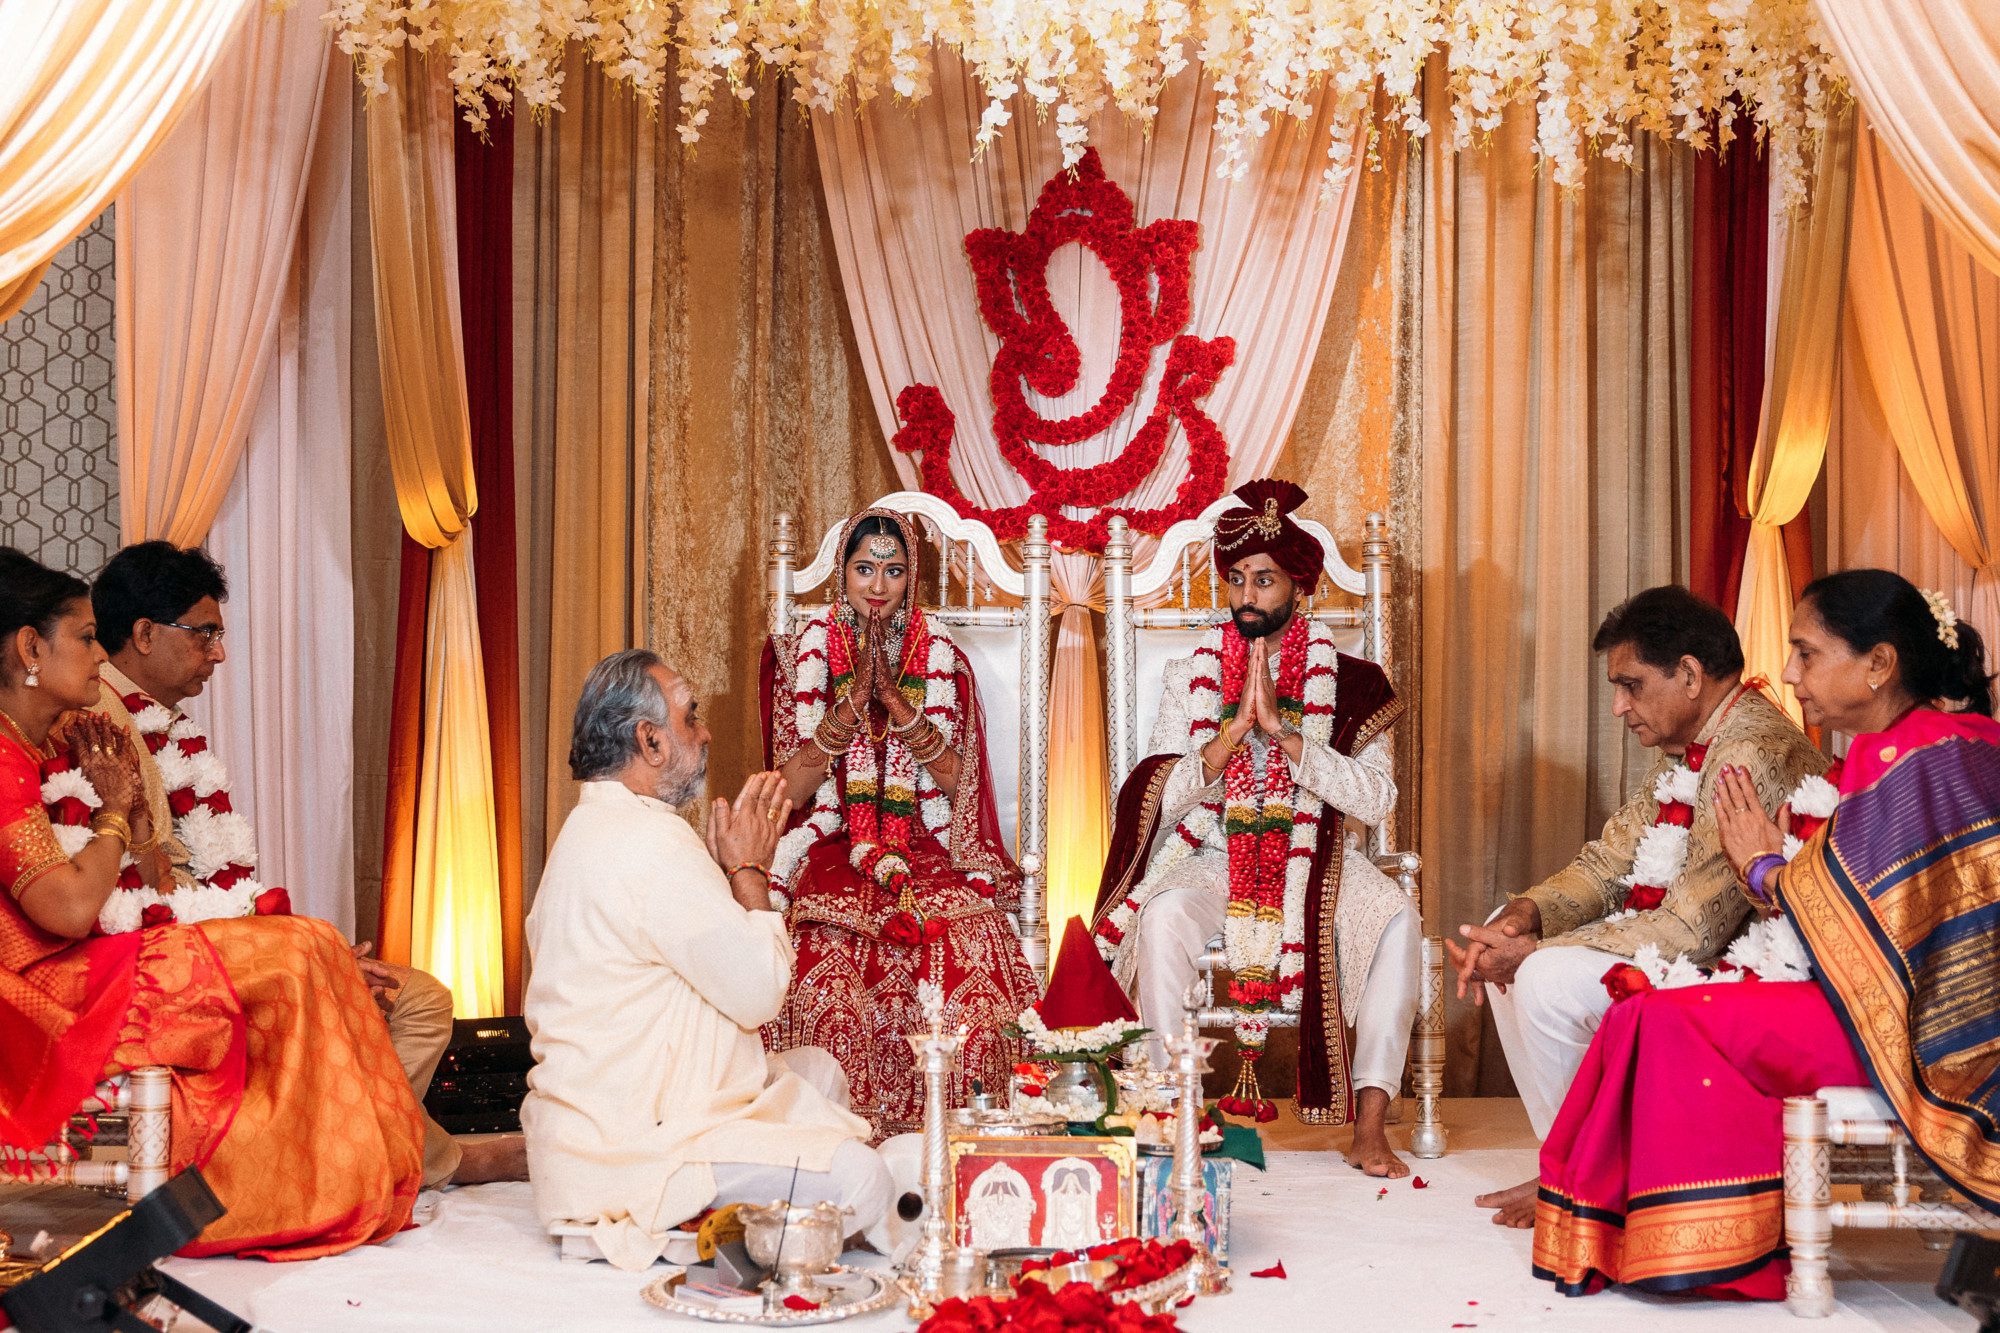 Michigan Indian wedding ceremony